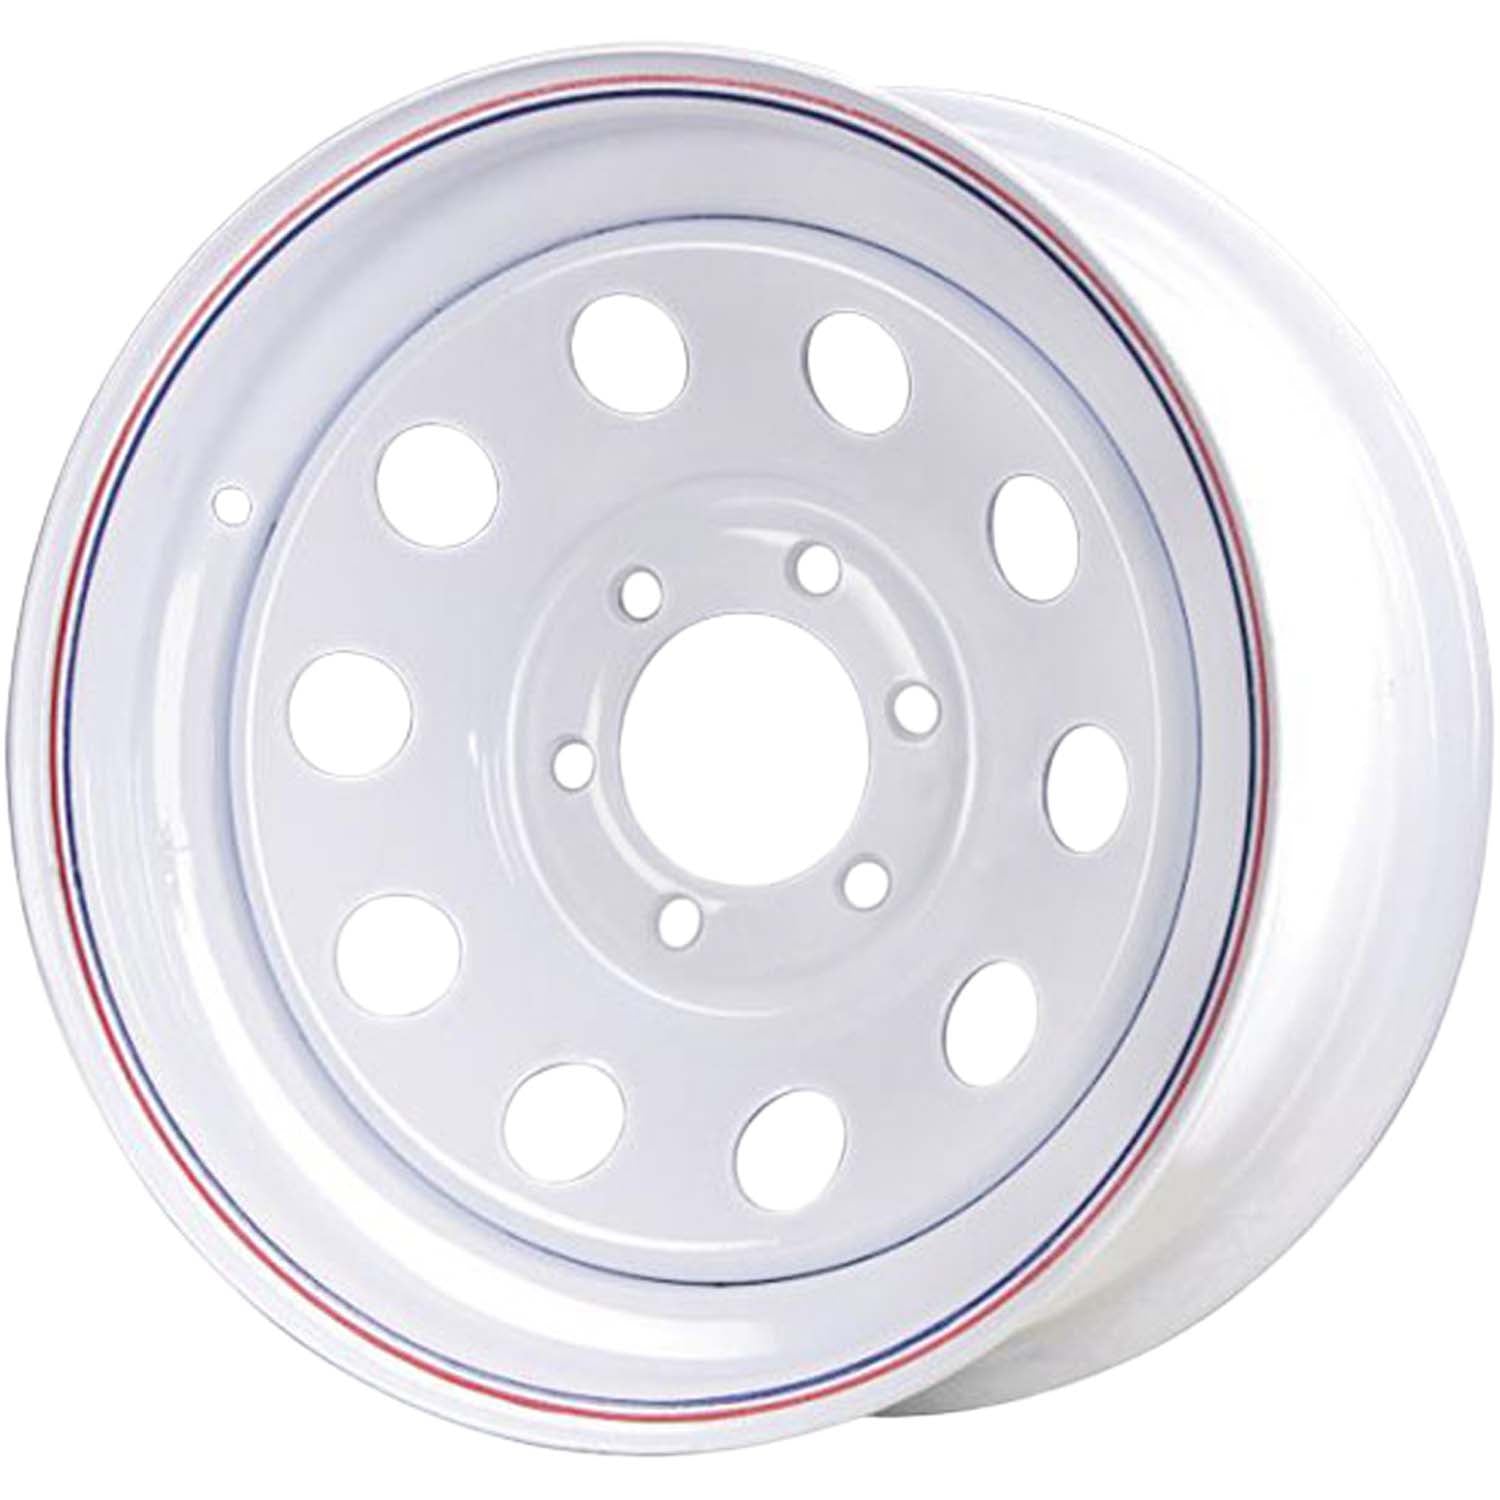 Carlisle 15x6 6 On 5.5 Modular Steel Wheel - White with Pin Stripes